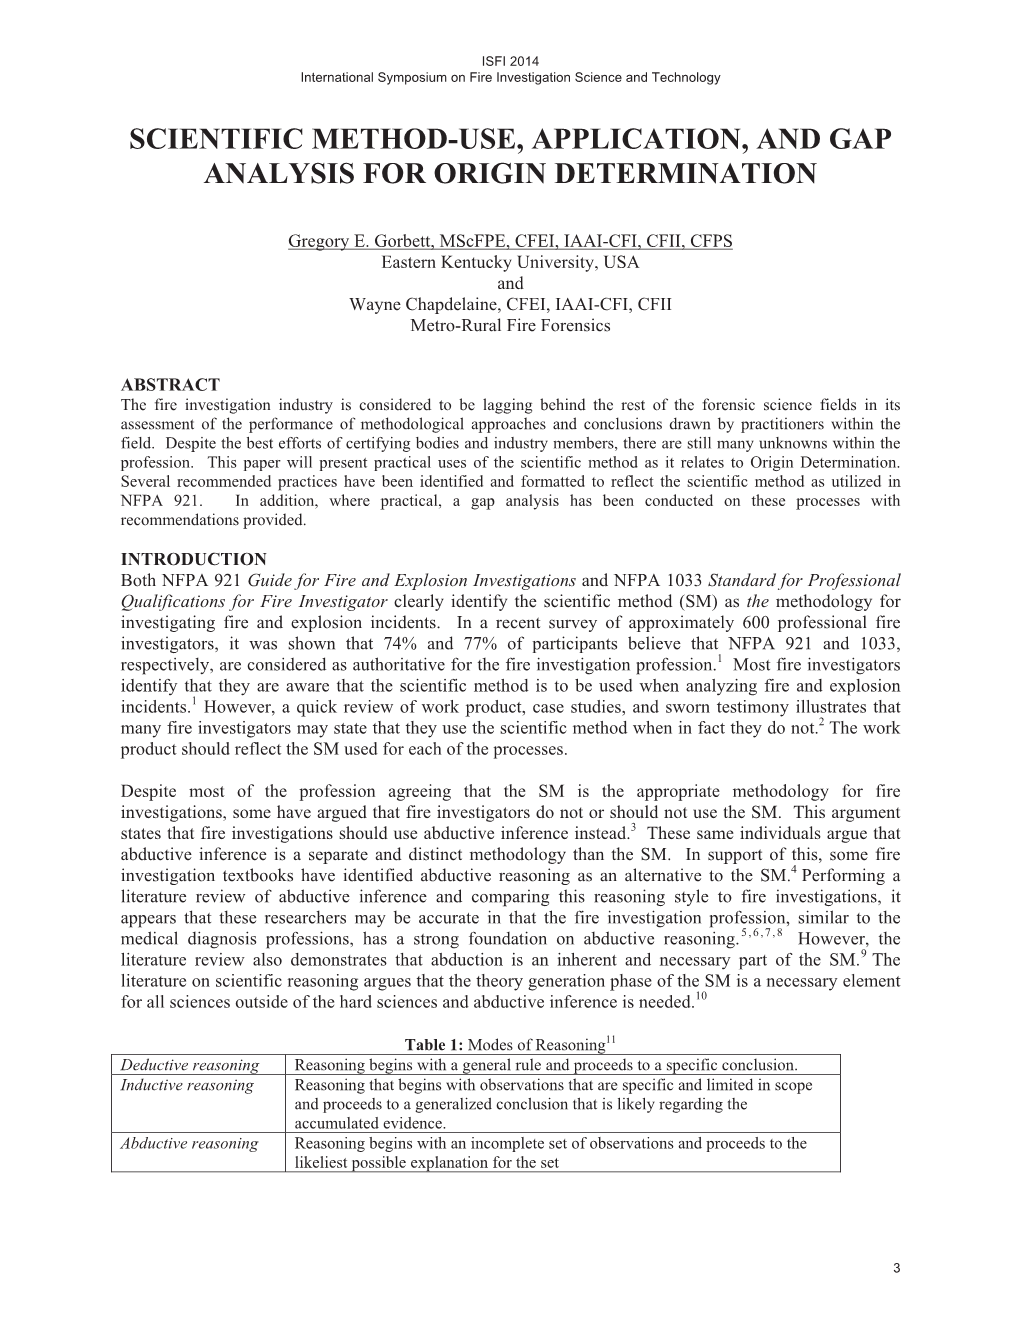 Scientific Method-Use, Application, and Gap Analysis for Origin Determination